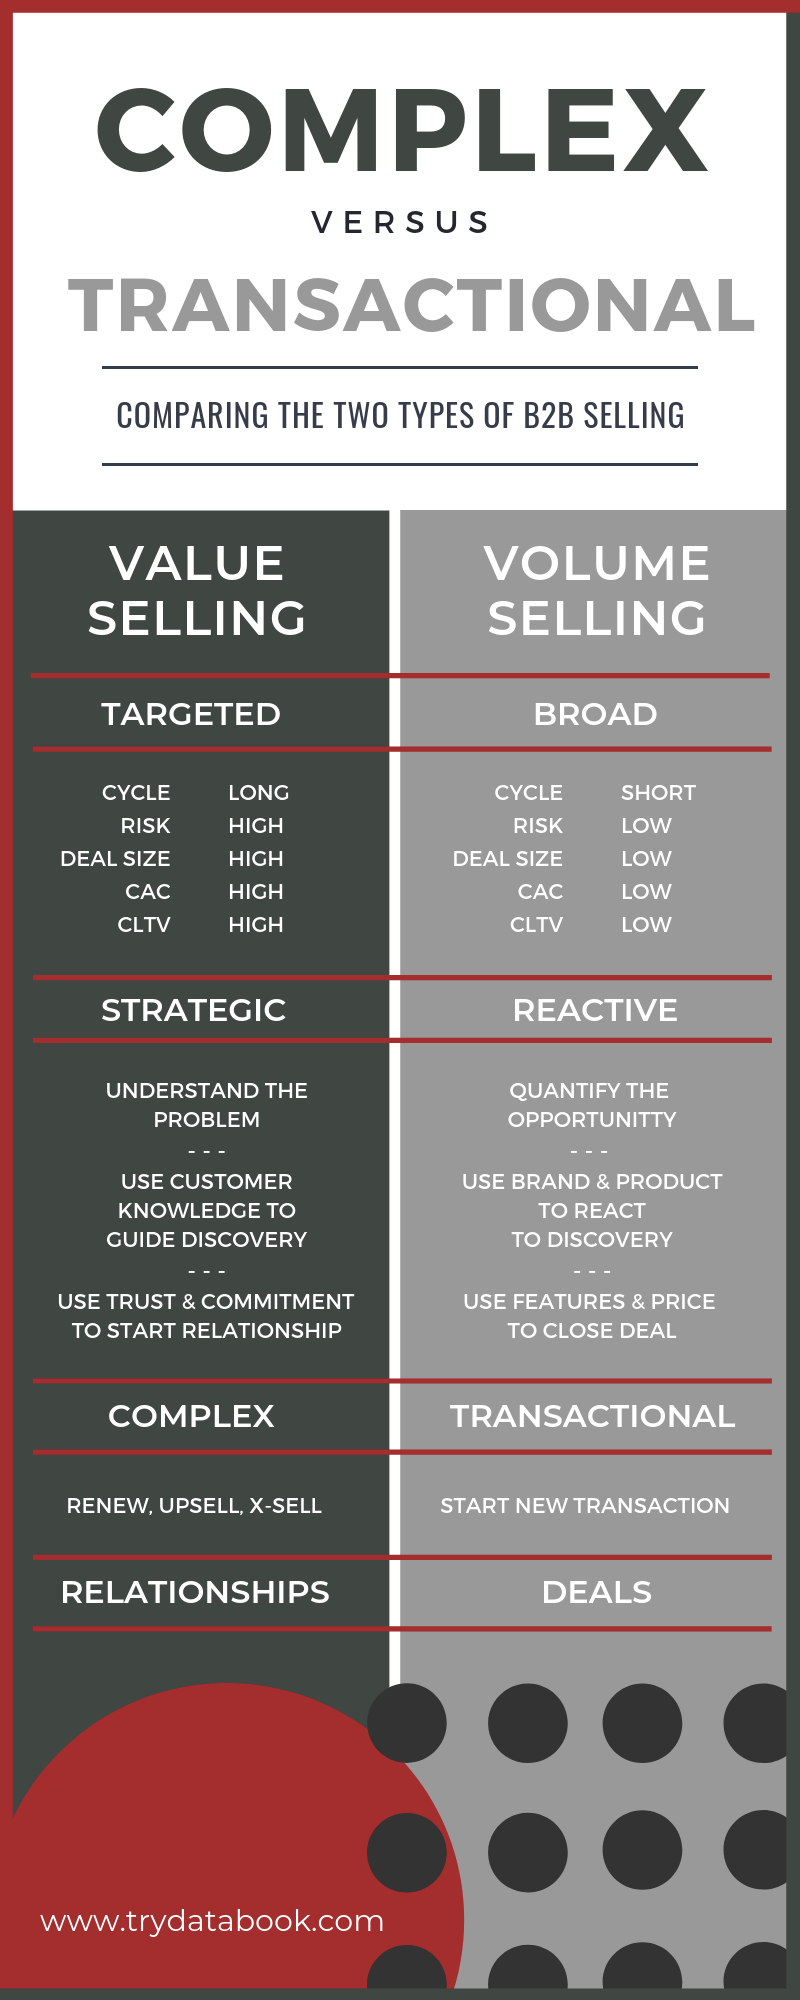 Complex Versus Transactional Sales infographic